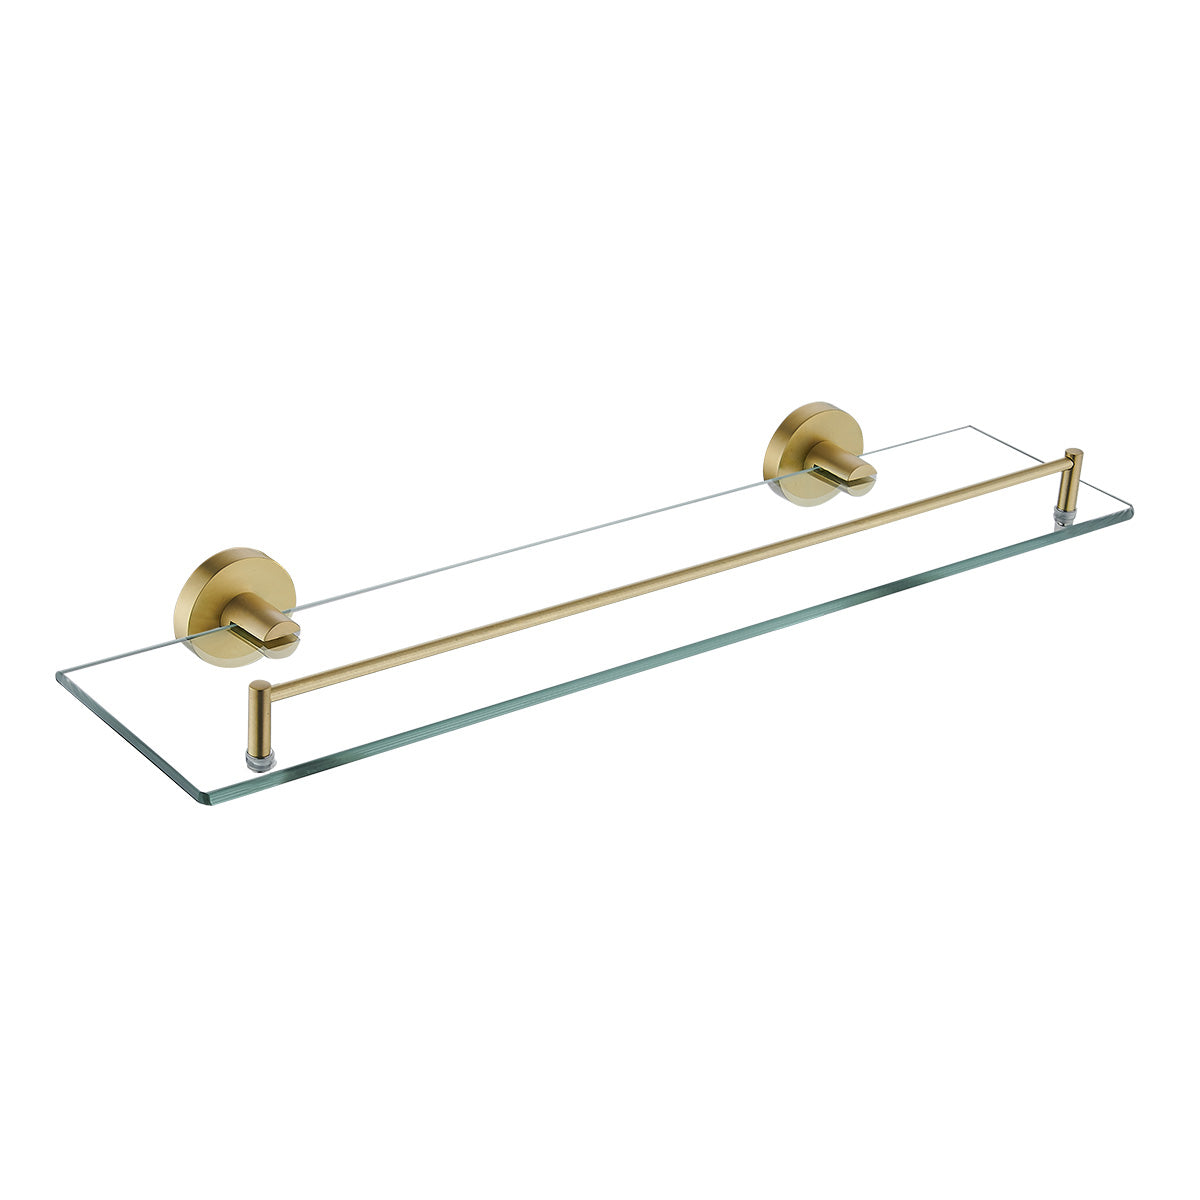 BA857 (BG) / Ideal Shelf (Brushed Gold) - Hellycar Ideal Brushed Gold Shelf - Brushed Gold Glass Bathroom Shelf